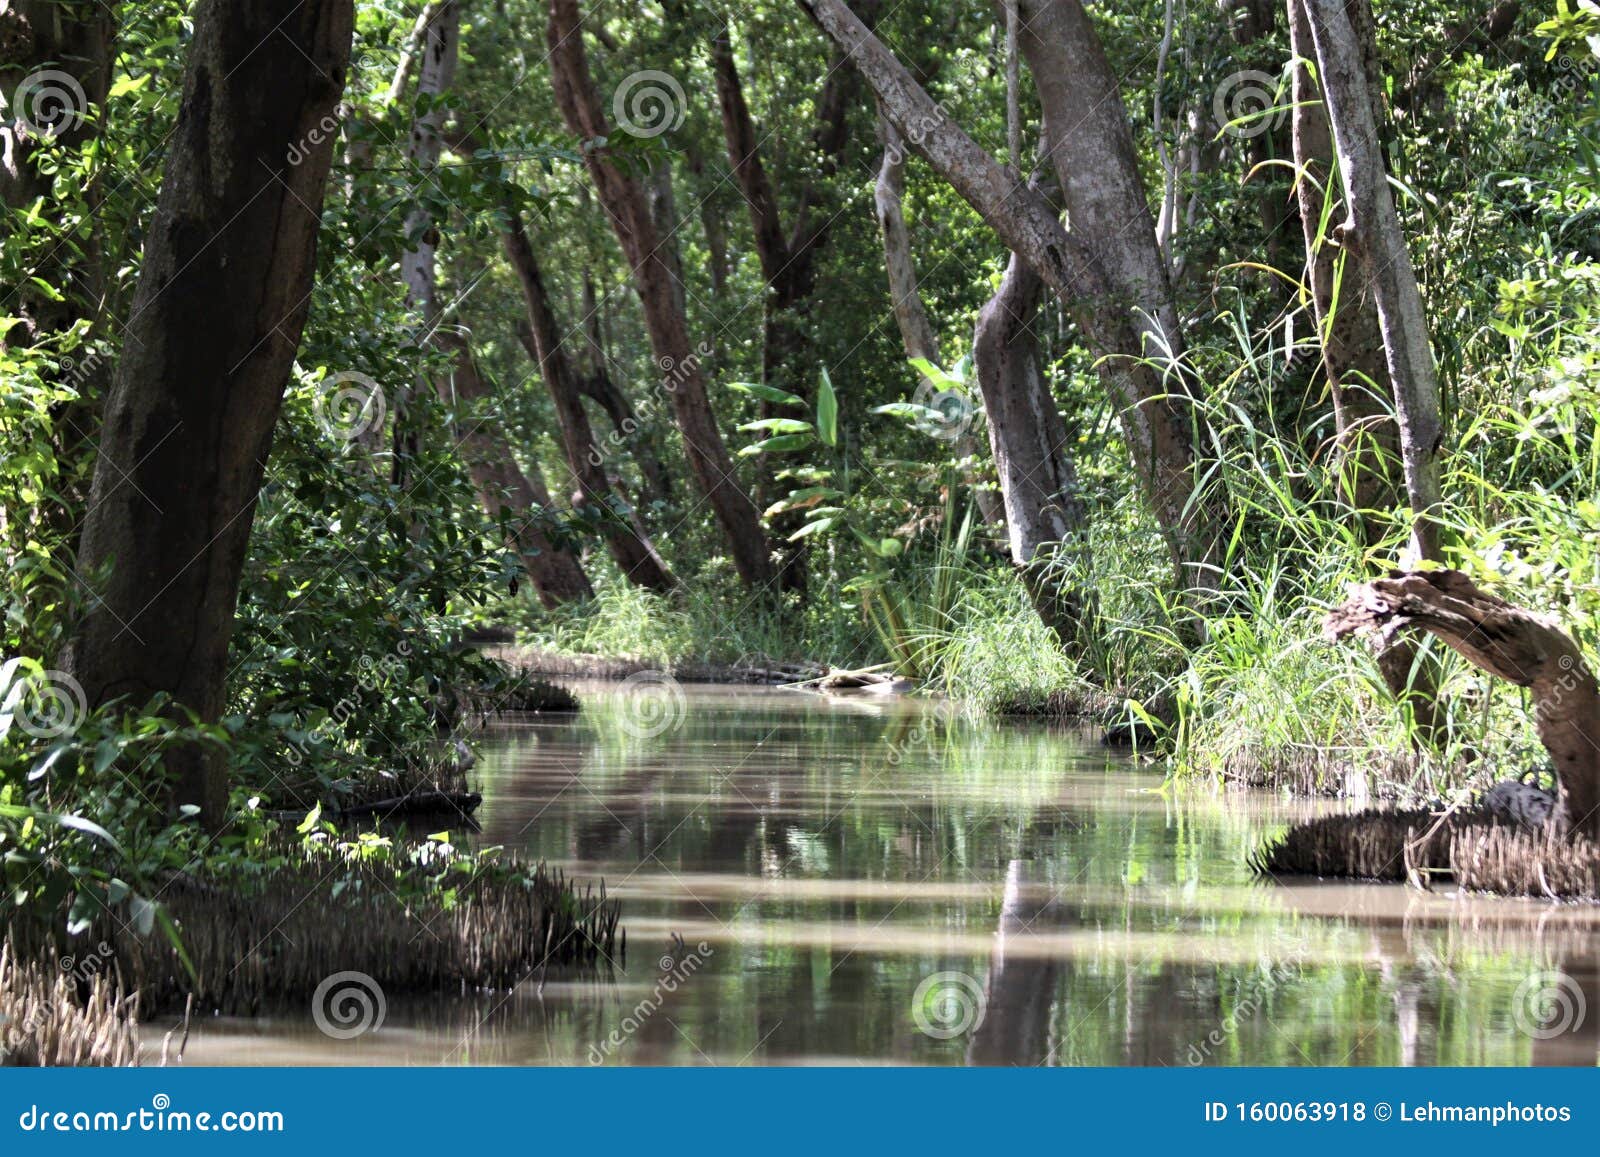 isla de salamanca swamp forest